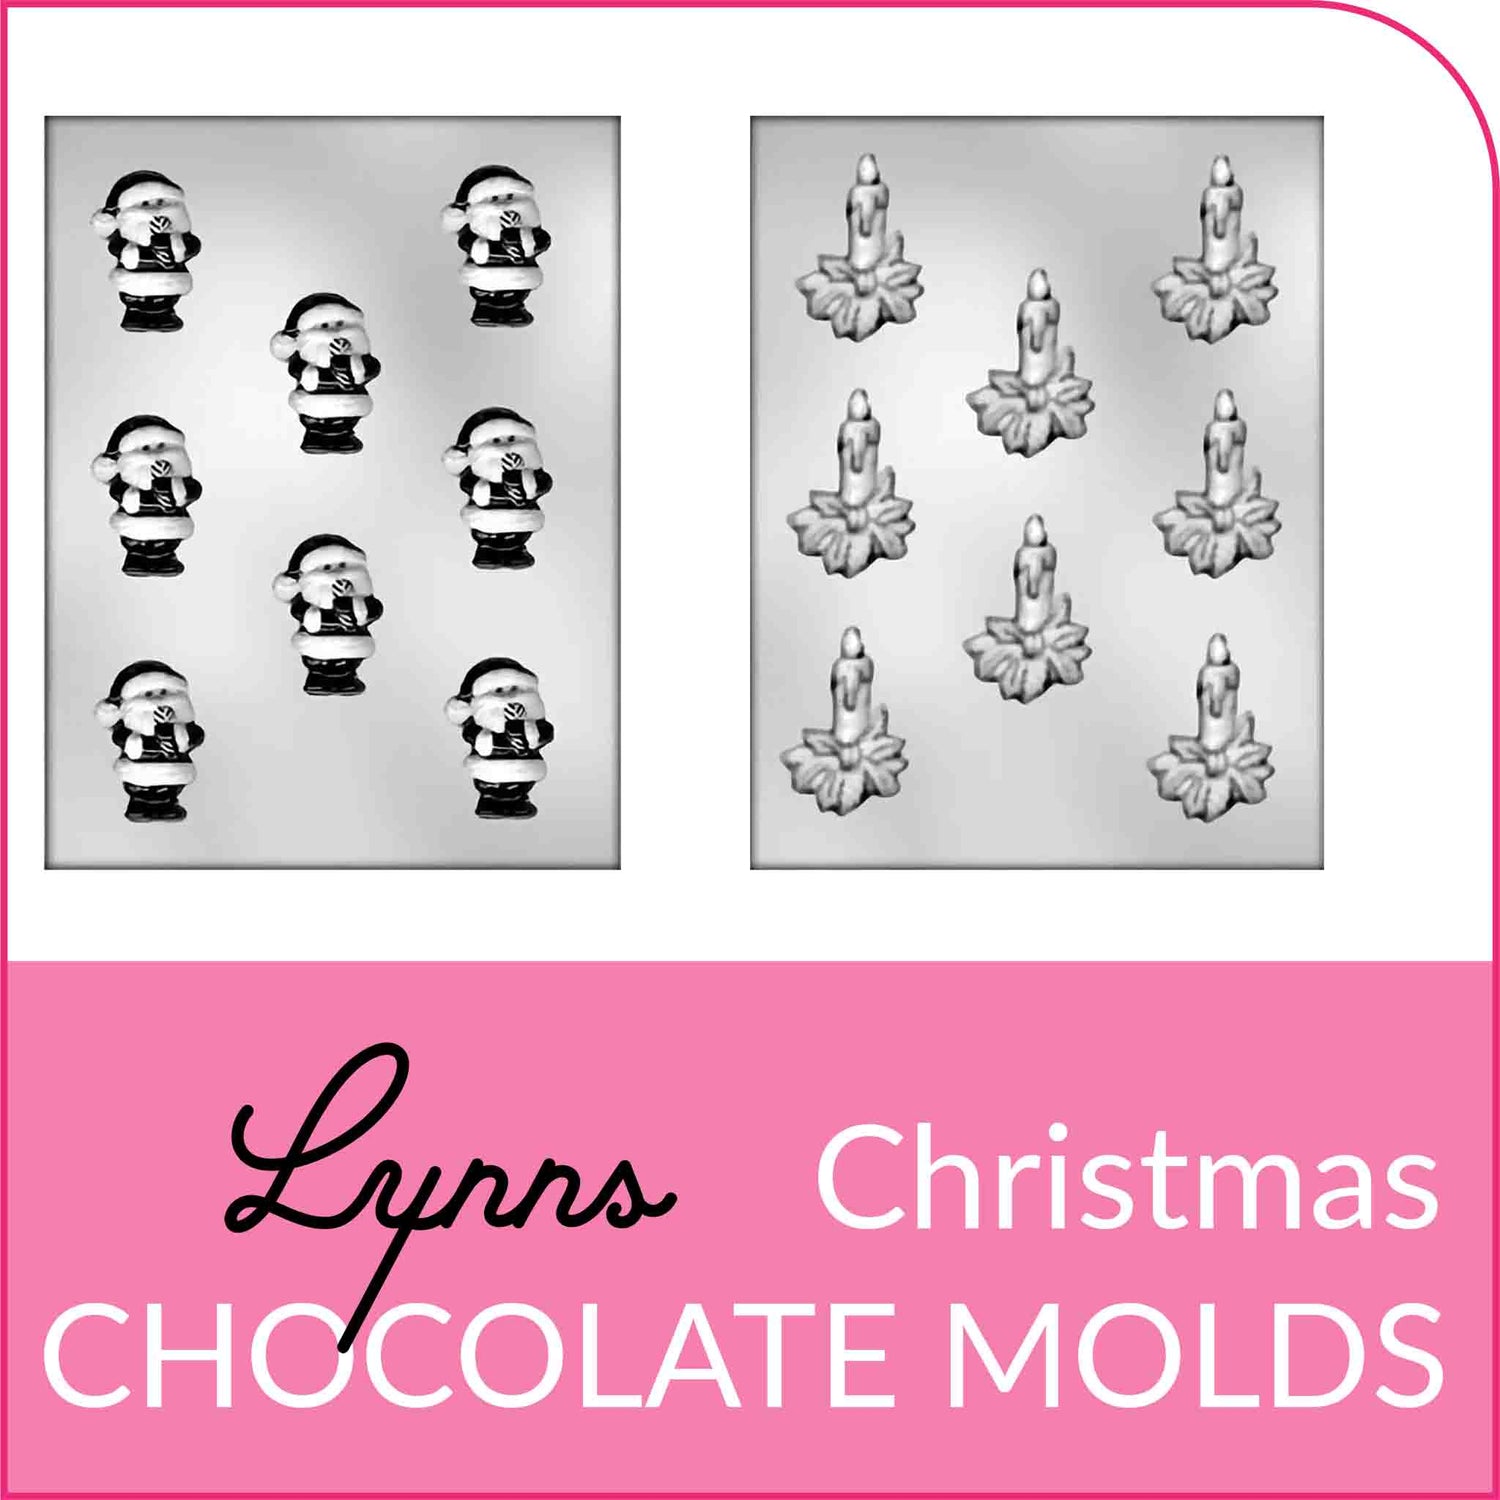 Shop Christmas Chocolate Molds at Lynn's